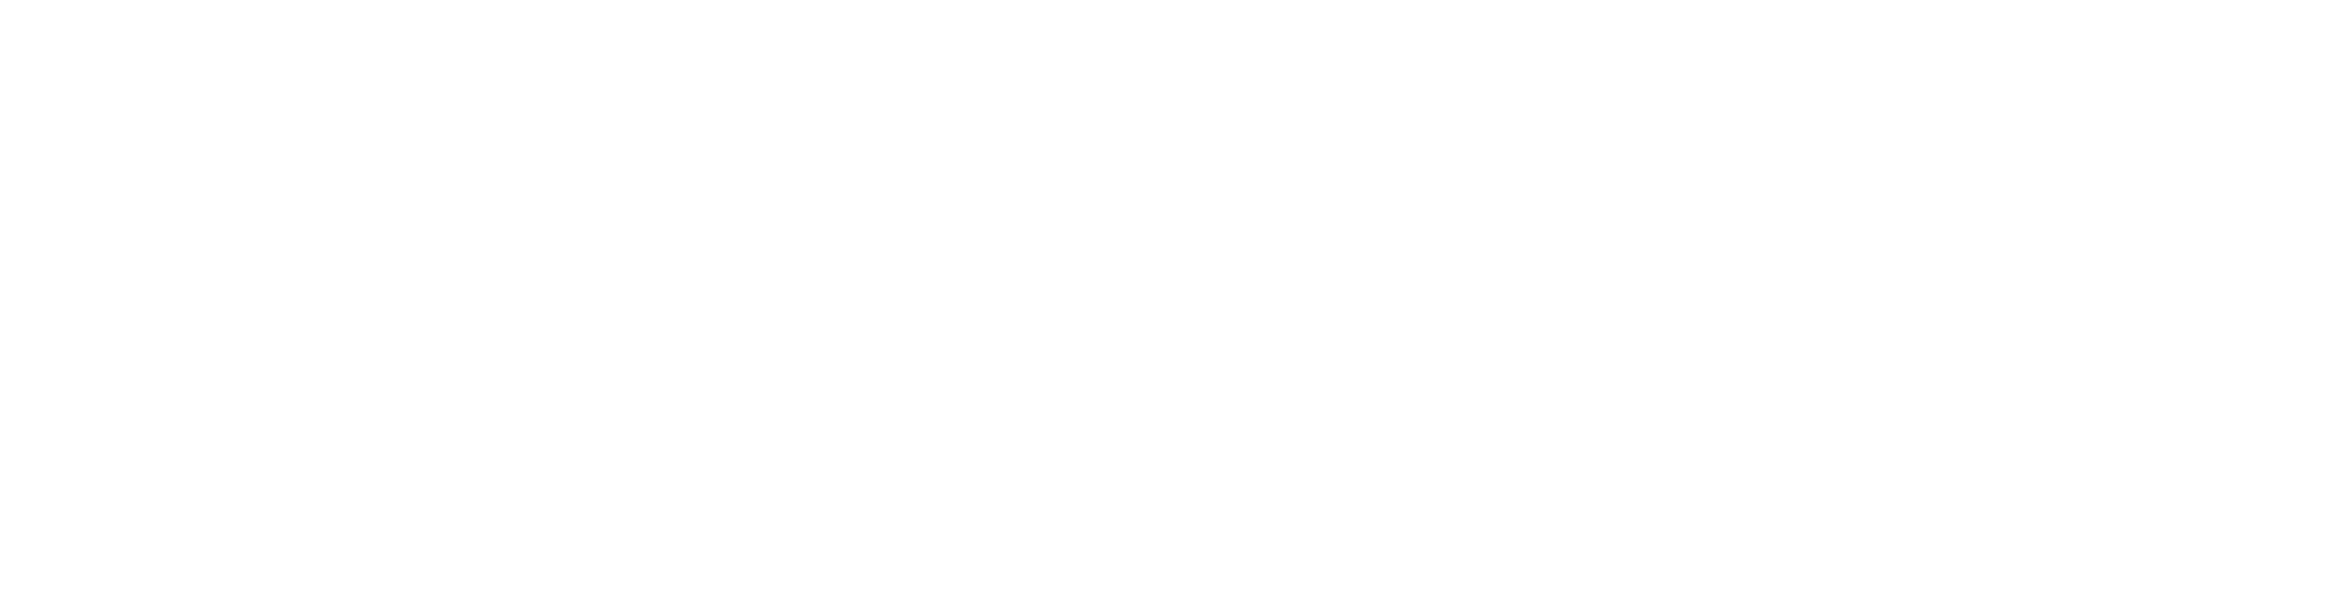 Swiss Medicare logo